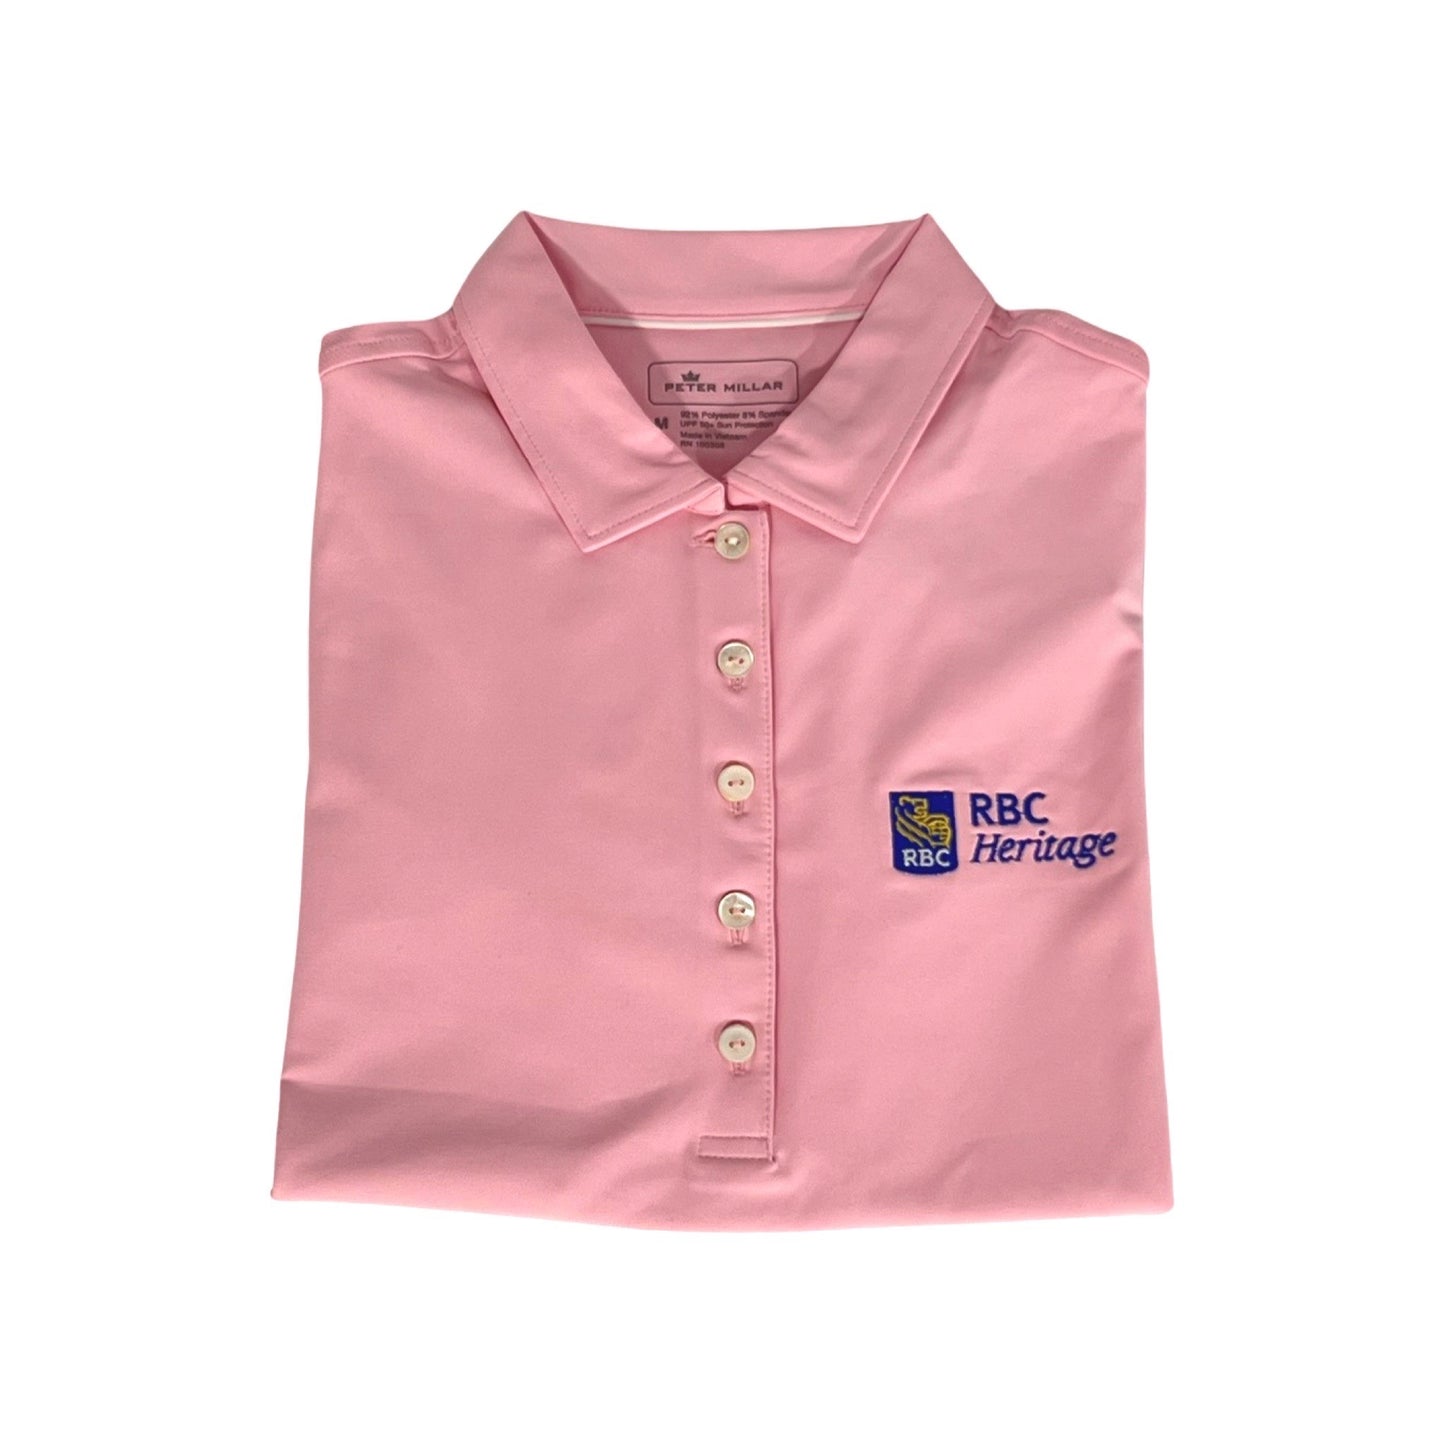 RBC Heritage Peter Millar Ladies Collared Polo - Pink